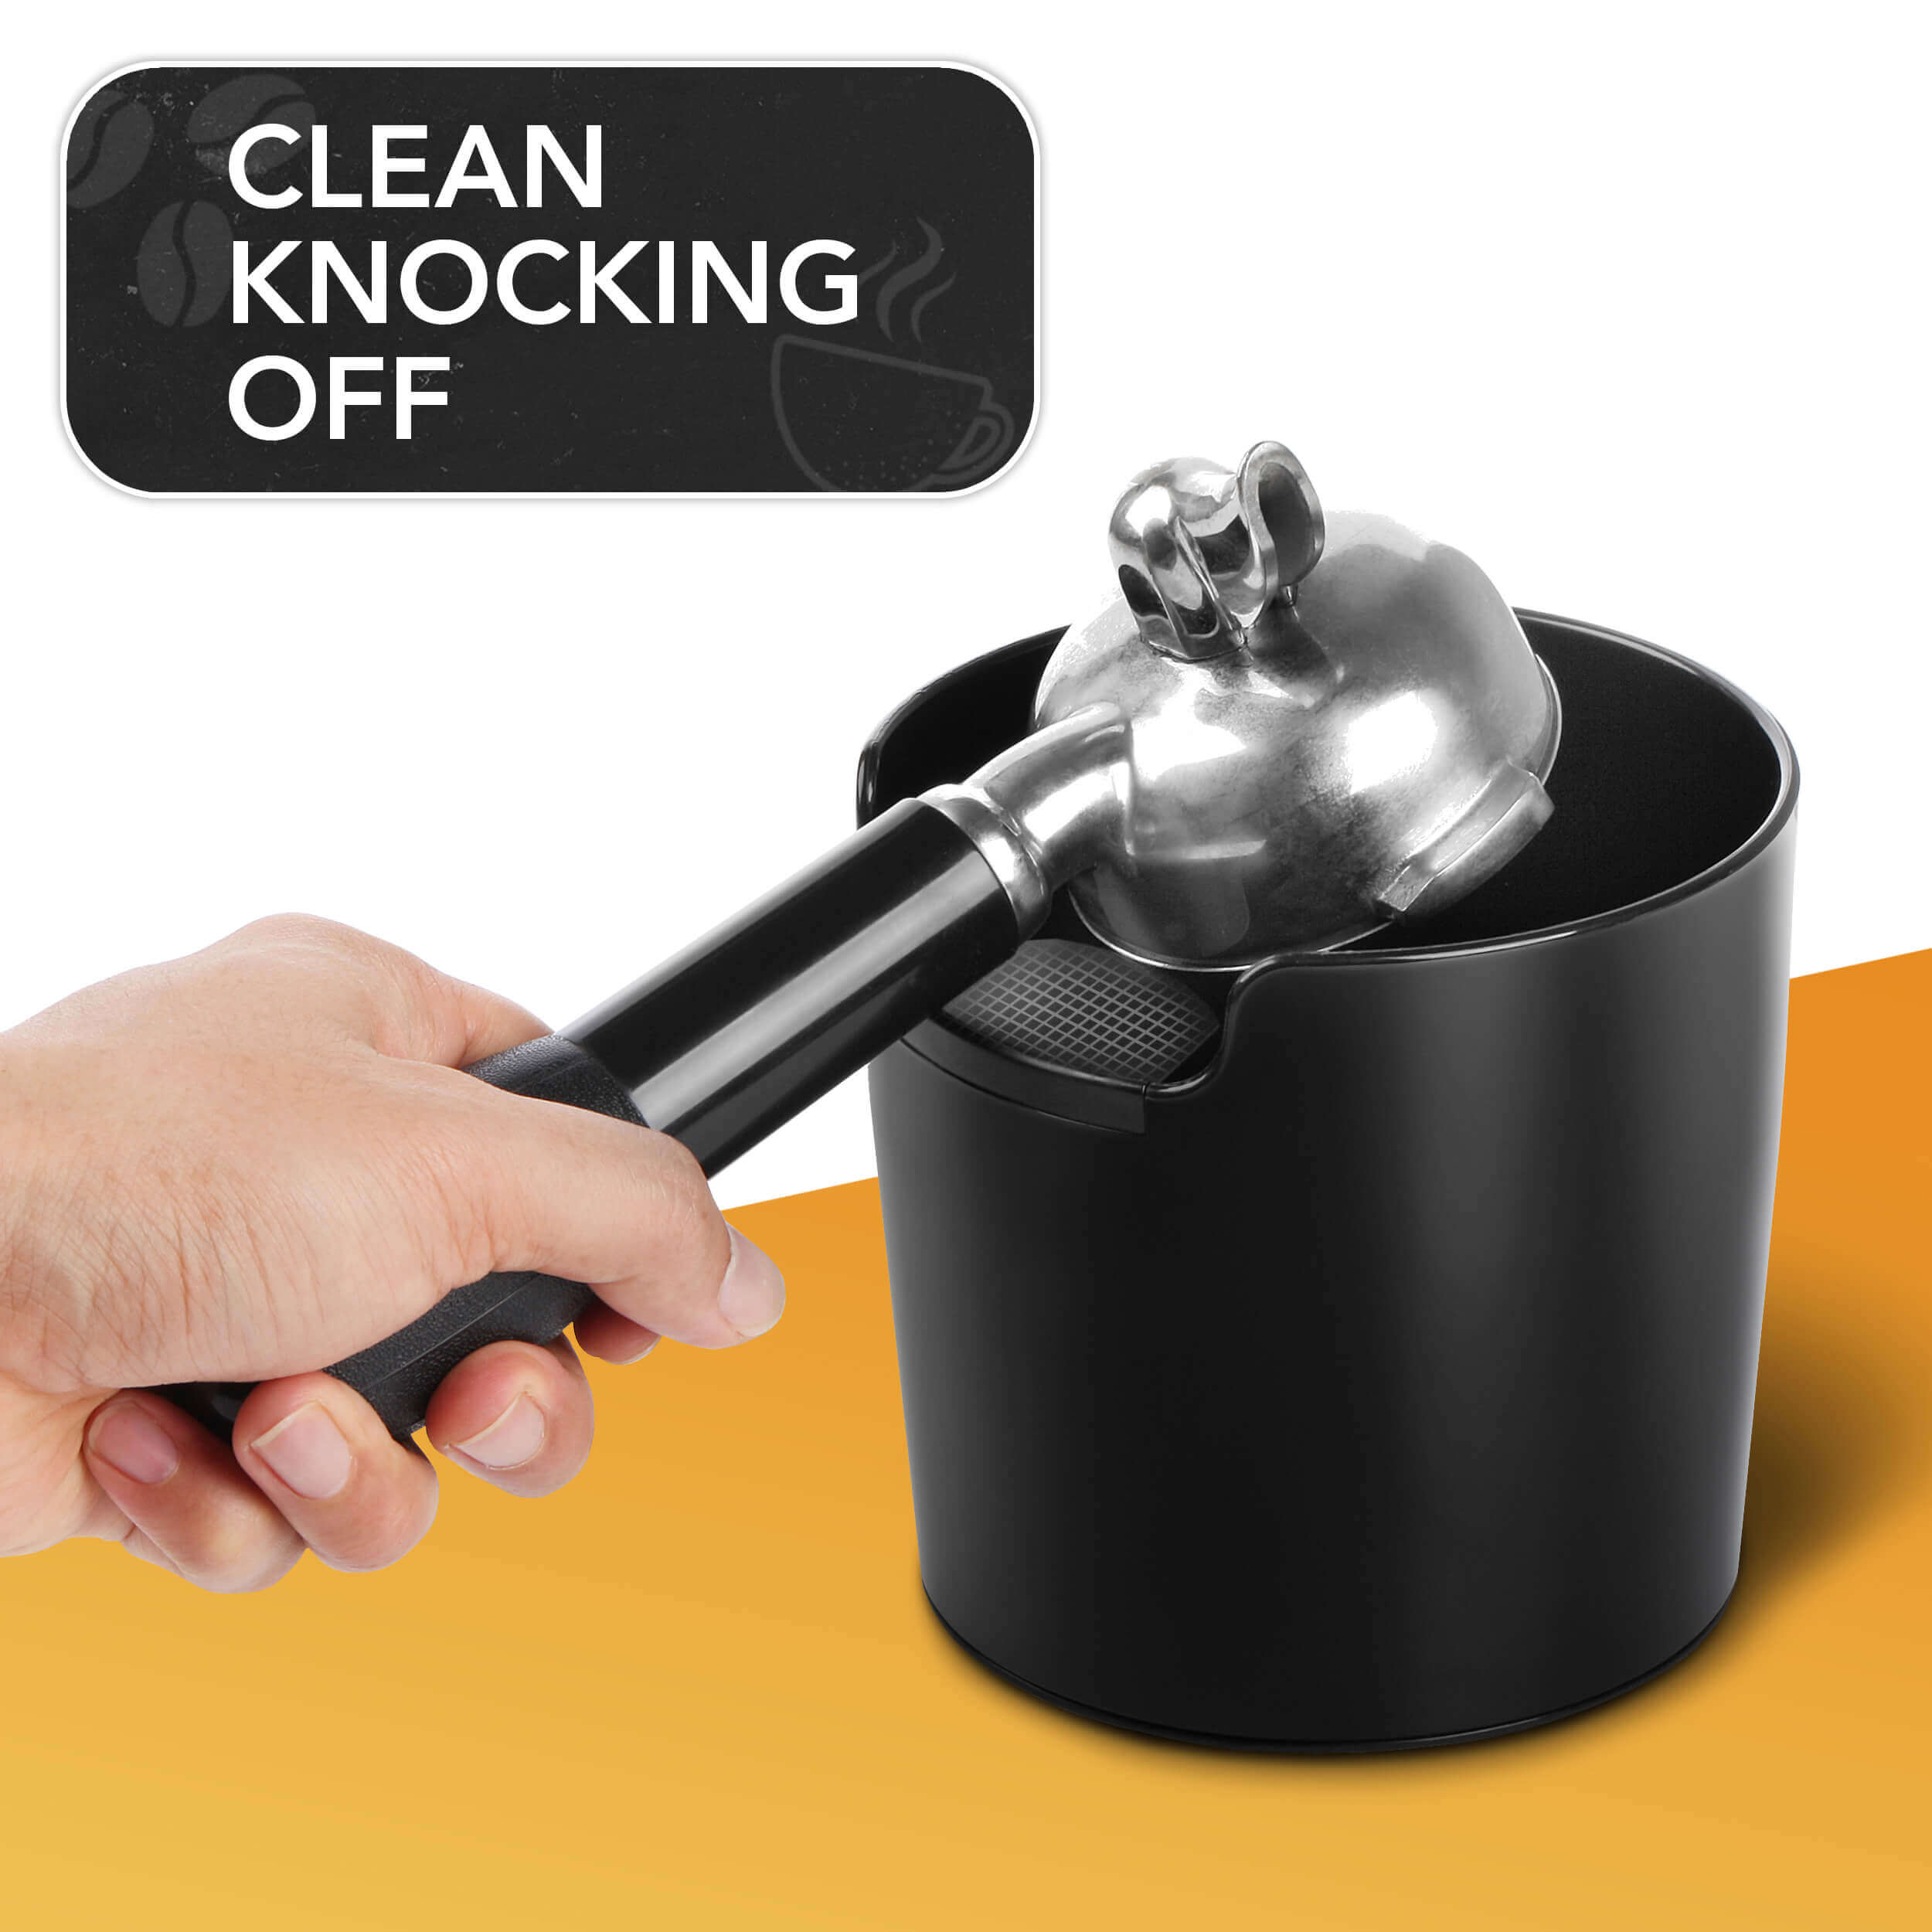 Clean knocking off - knockbox